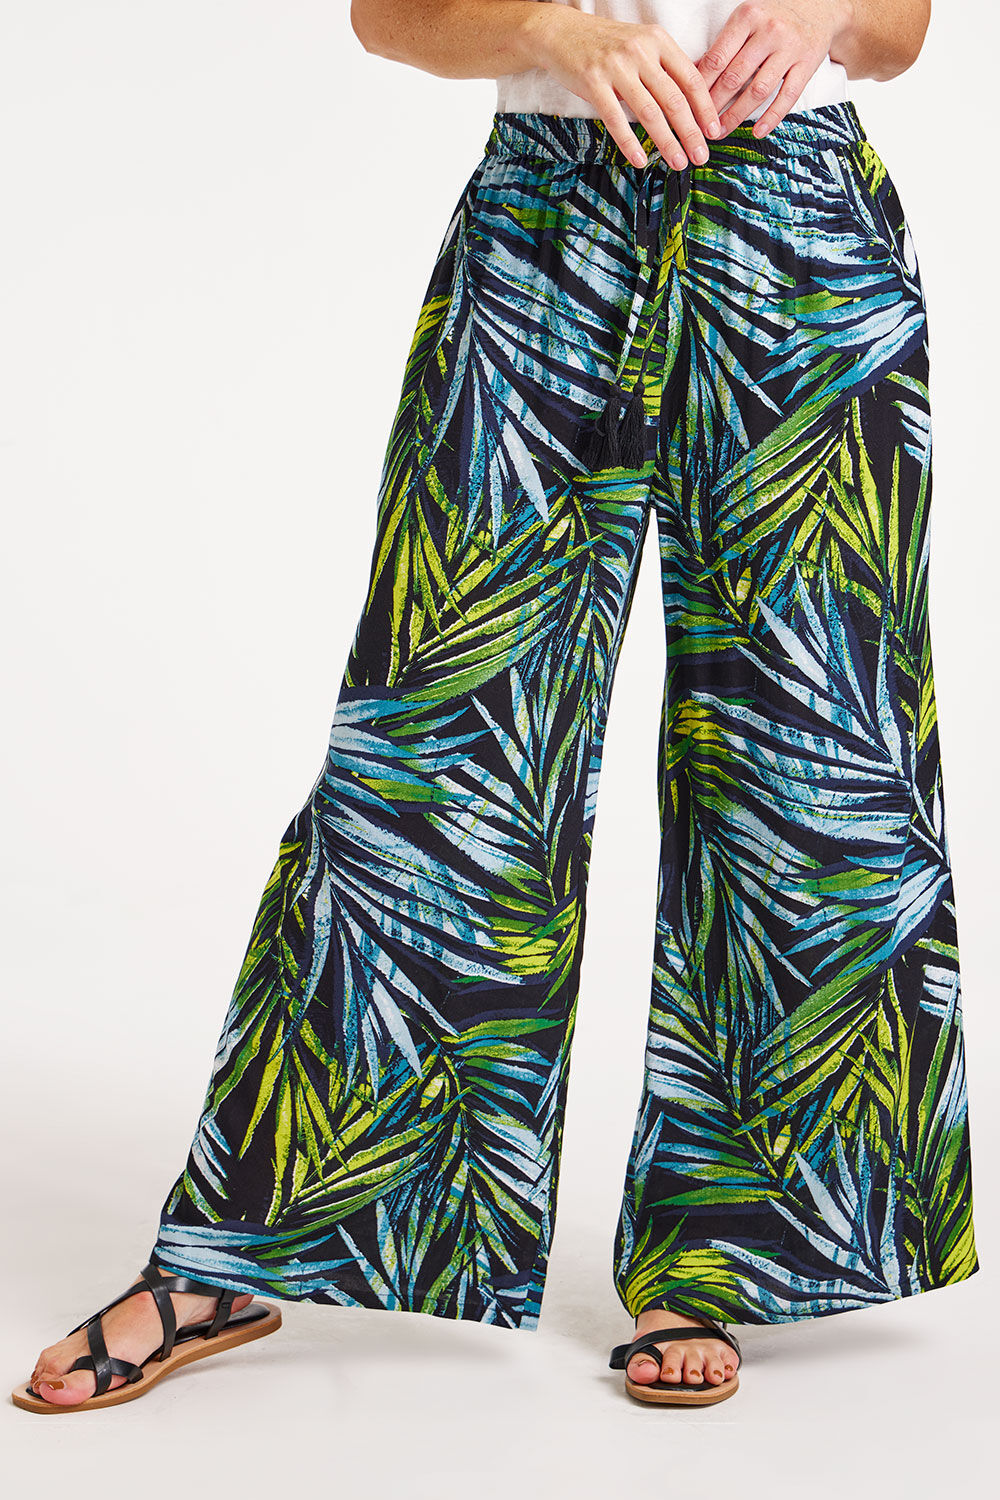 Bonmarche Women’s Black and Green Viscose Palm Print Wide Leg Elasticated Trousers, Size: 28